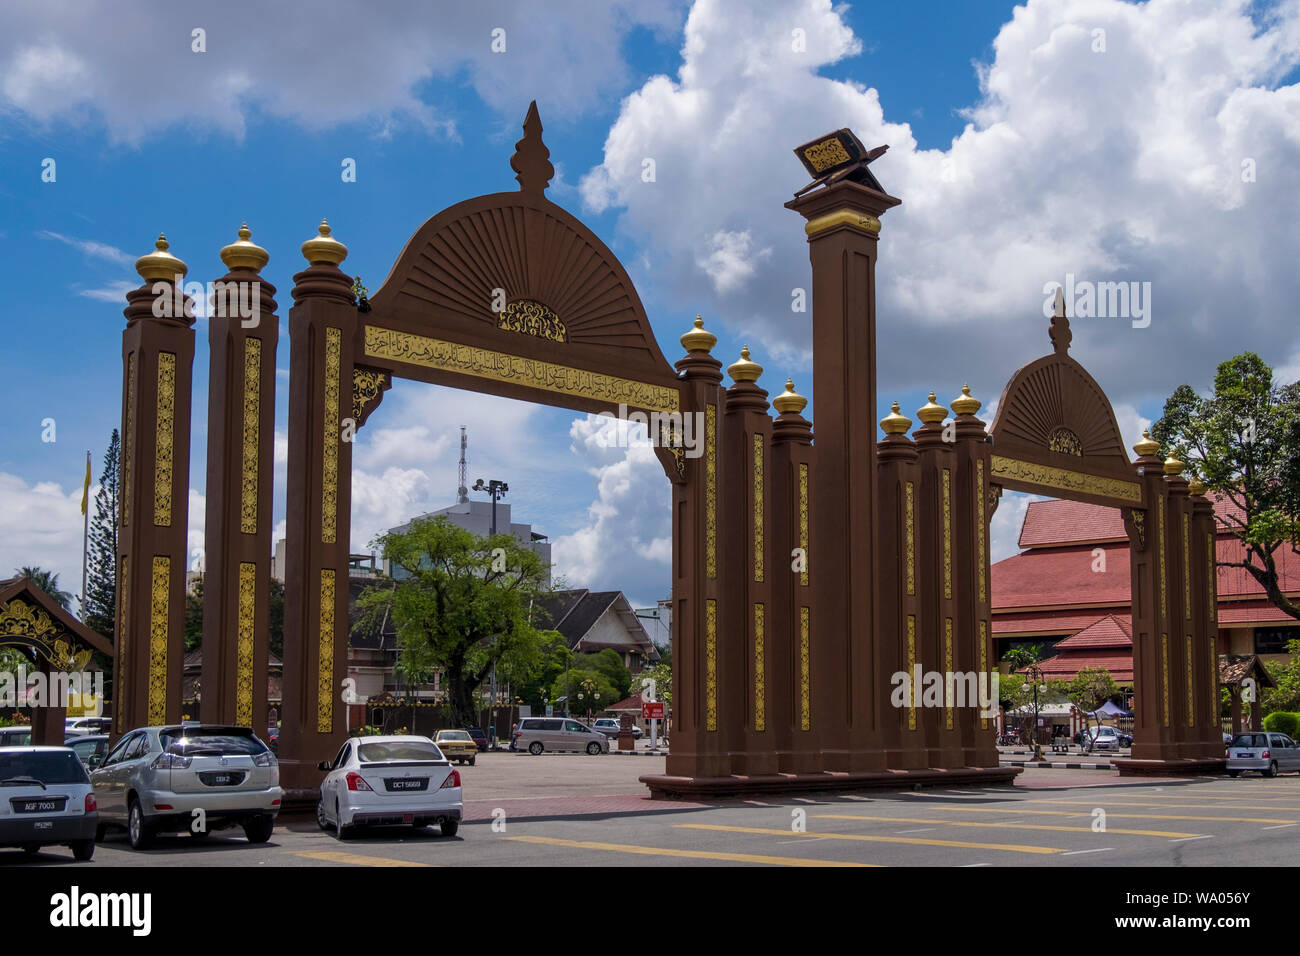 The landmark gate in the Al-Quran Rehal Park in Kota Bharu, Malaysia. Stock Photo